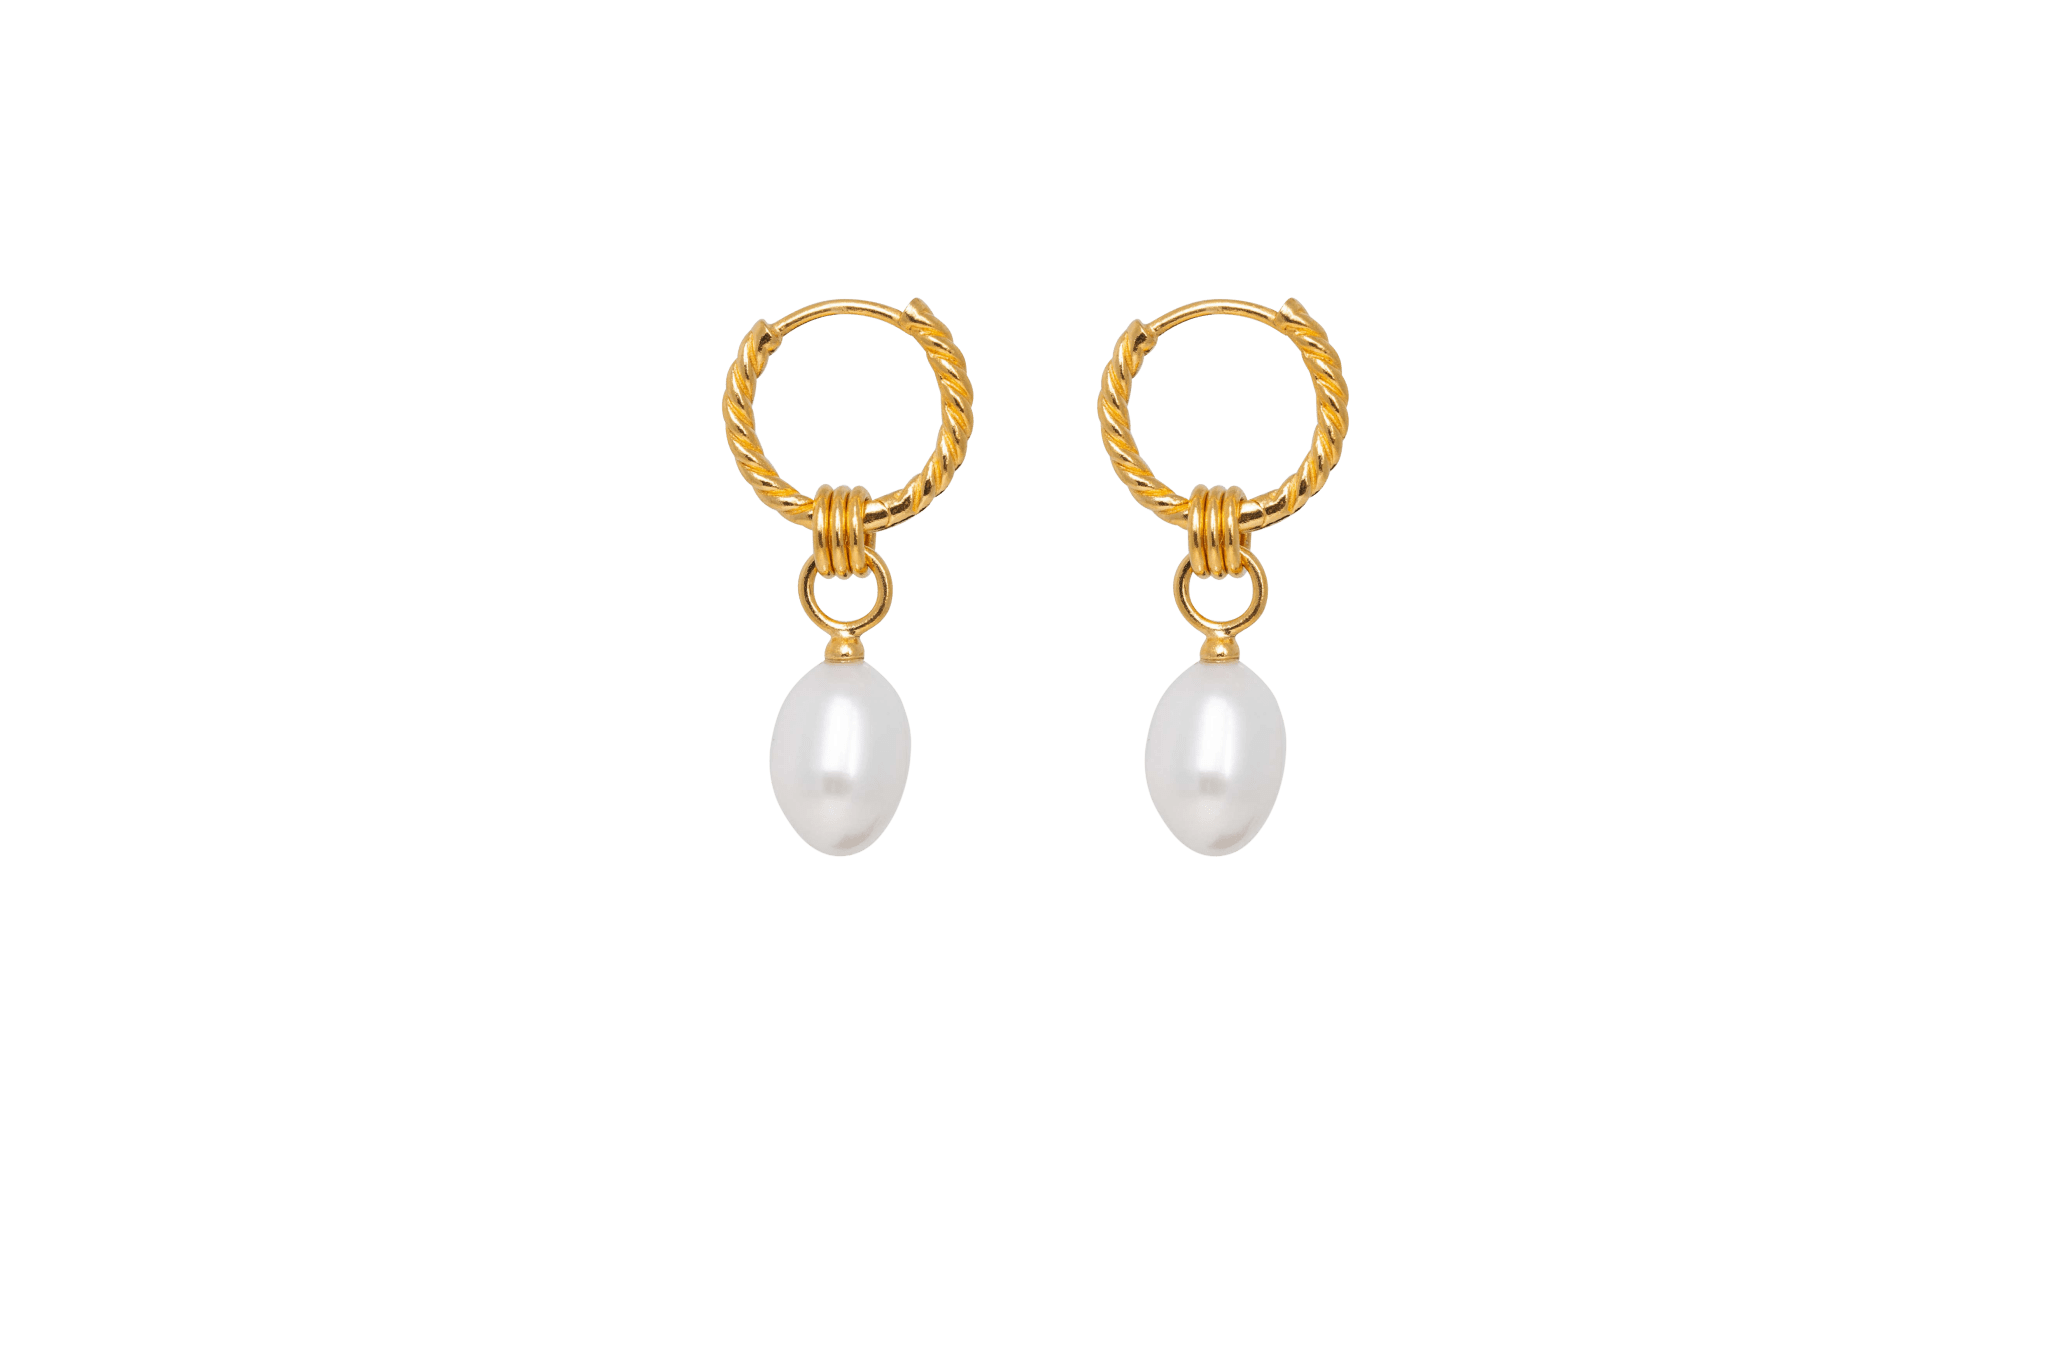 IX Ocean Pearl Earrings